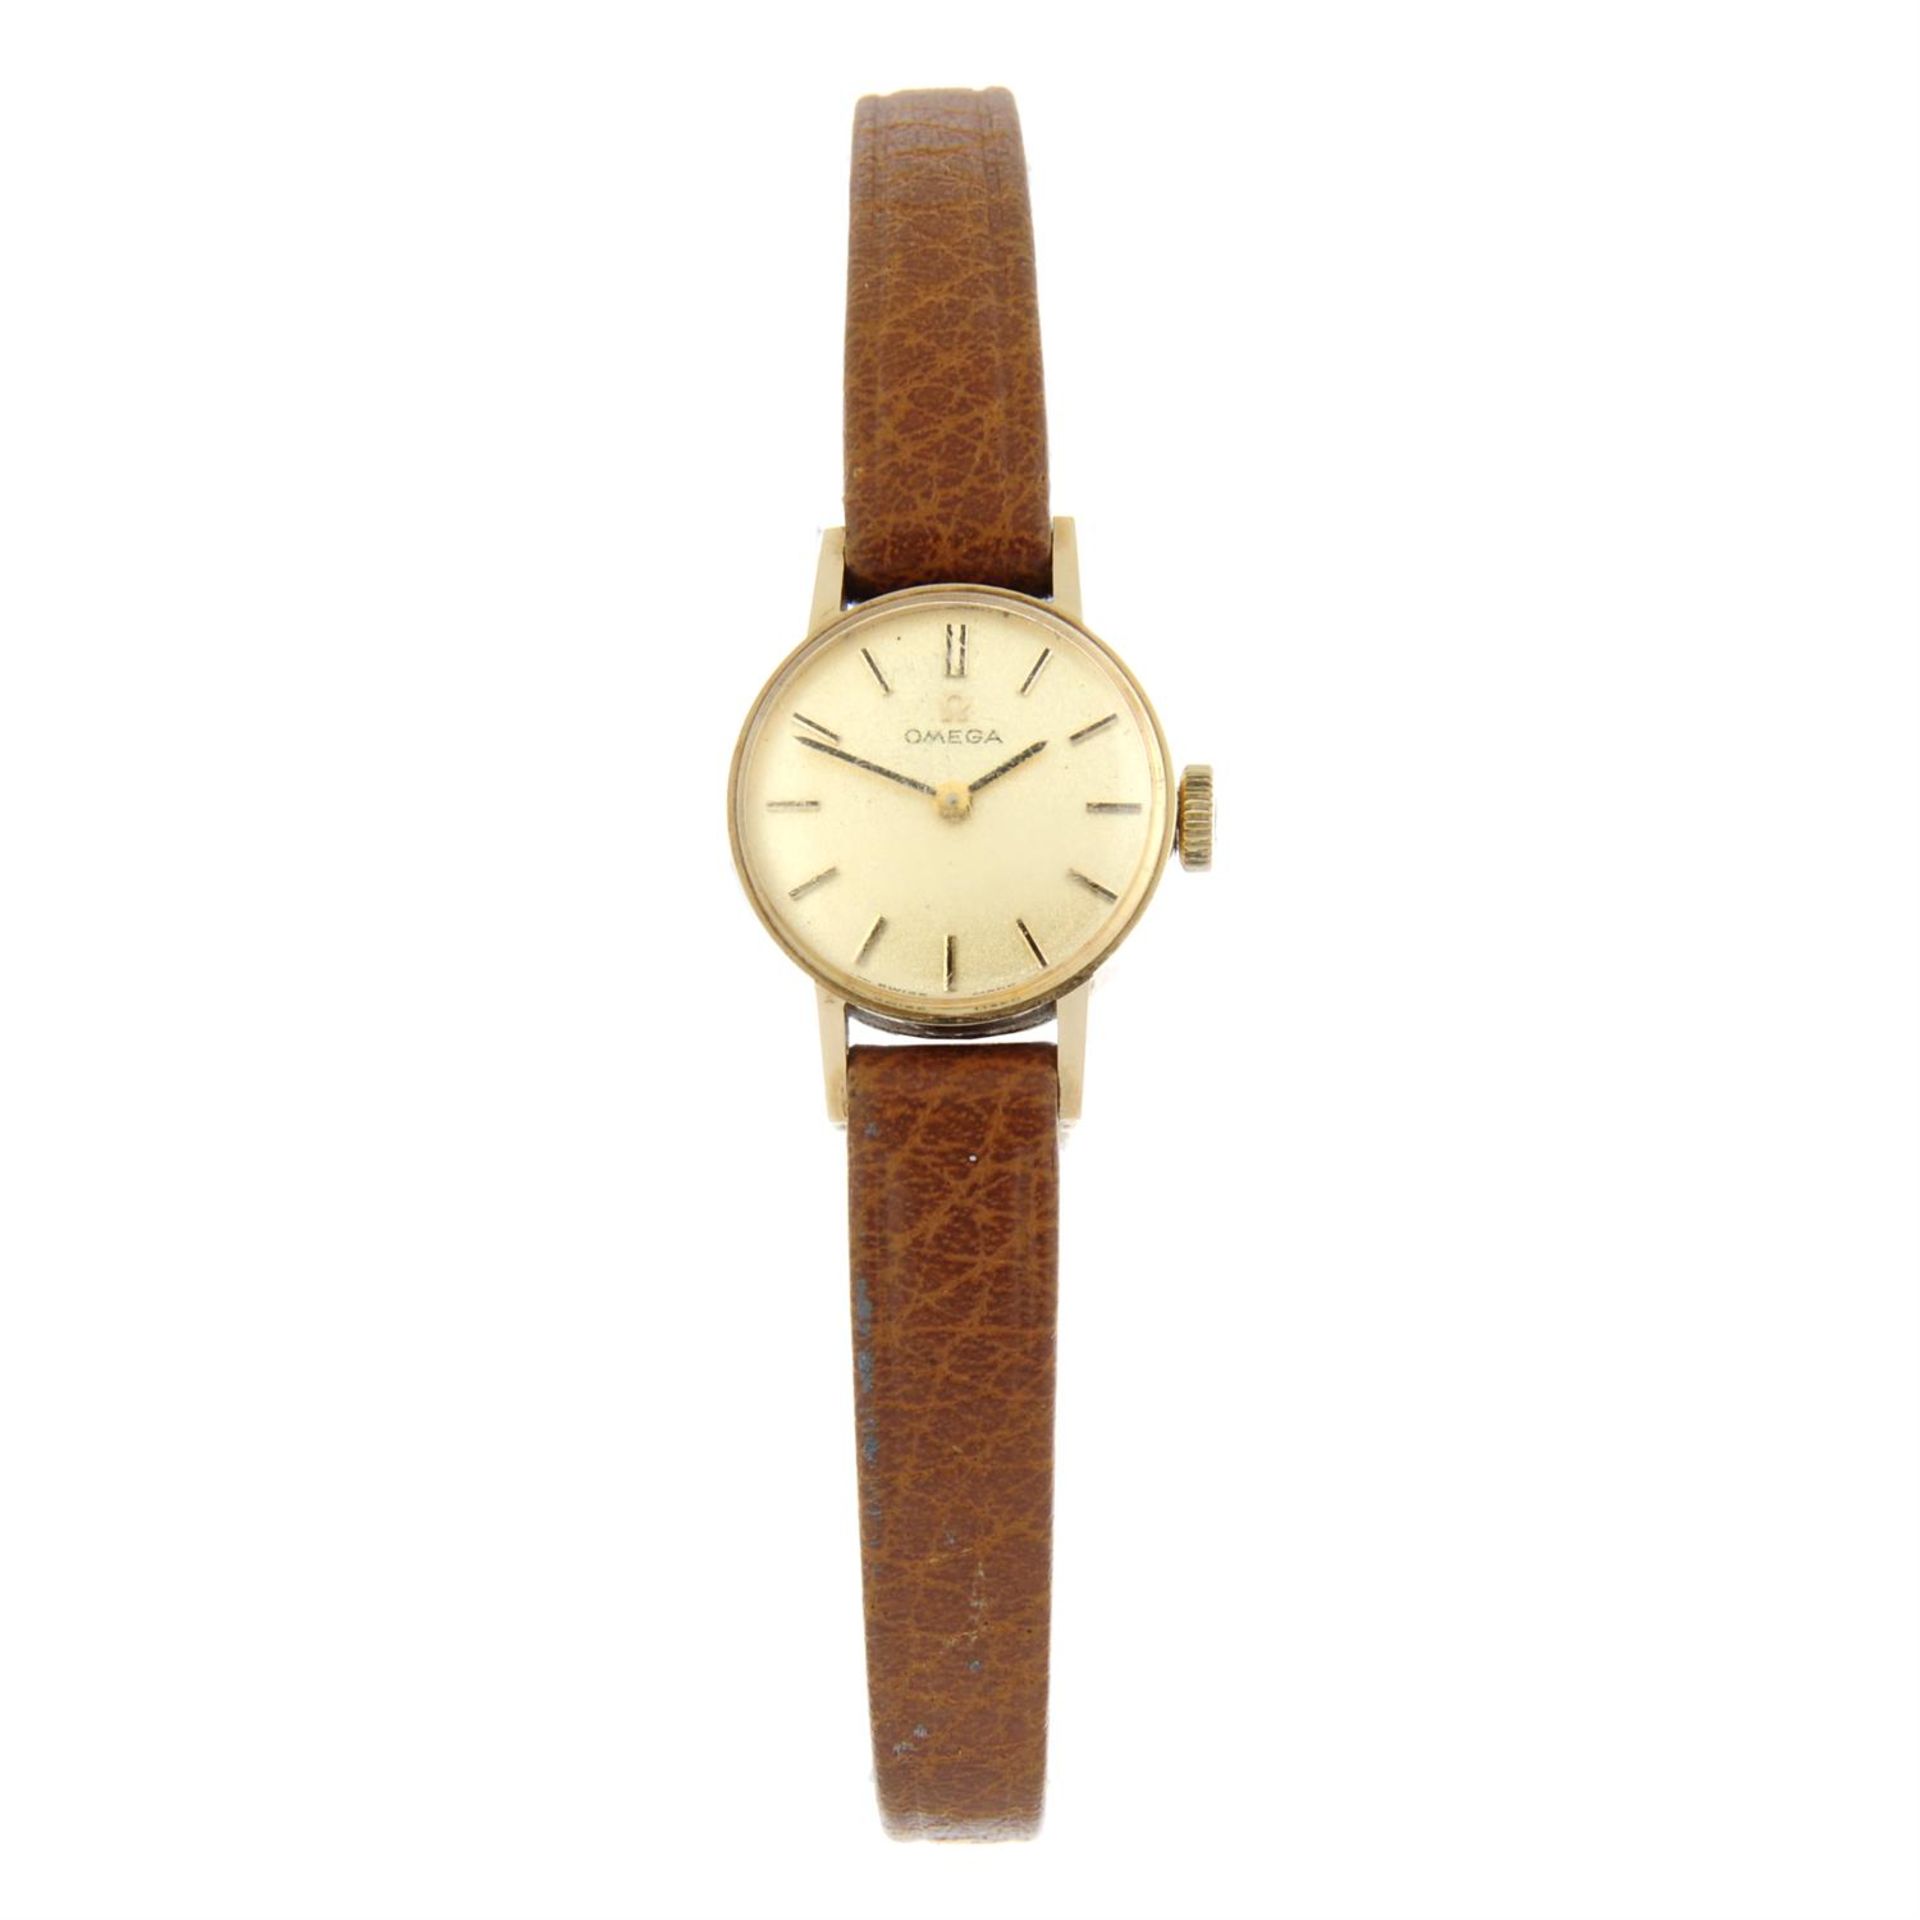 OMEGA - a 9ct yellow gold wrist watch, 17mm.